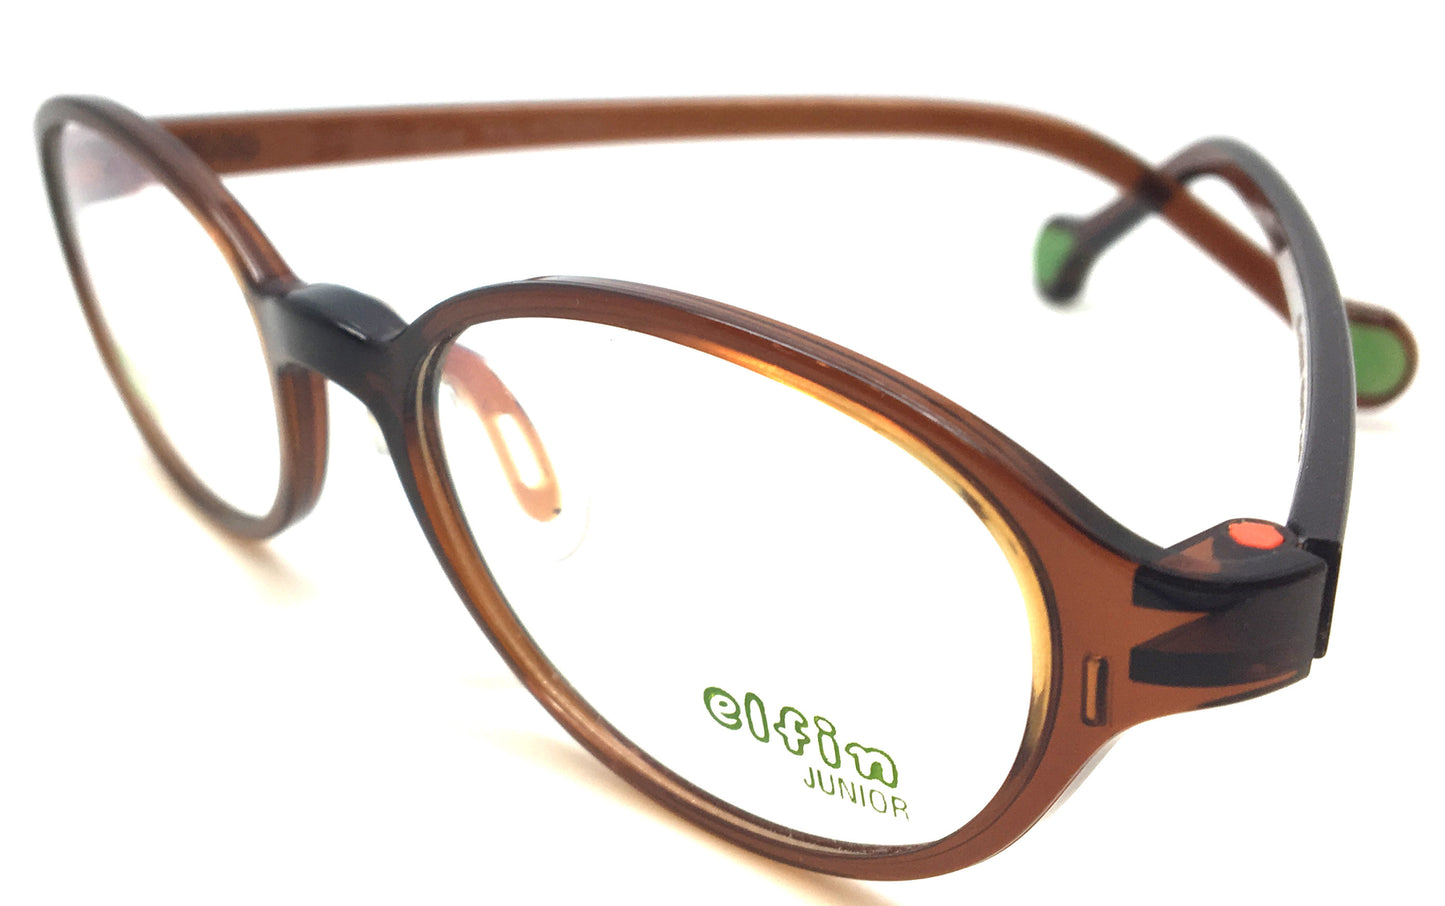 Elfin Eyeglasses Kids 슈퍼 플렉시블 프레임 1007 C3